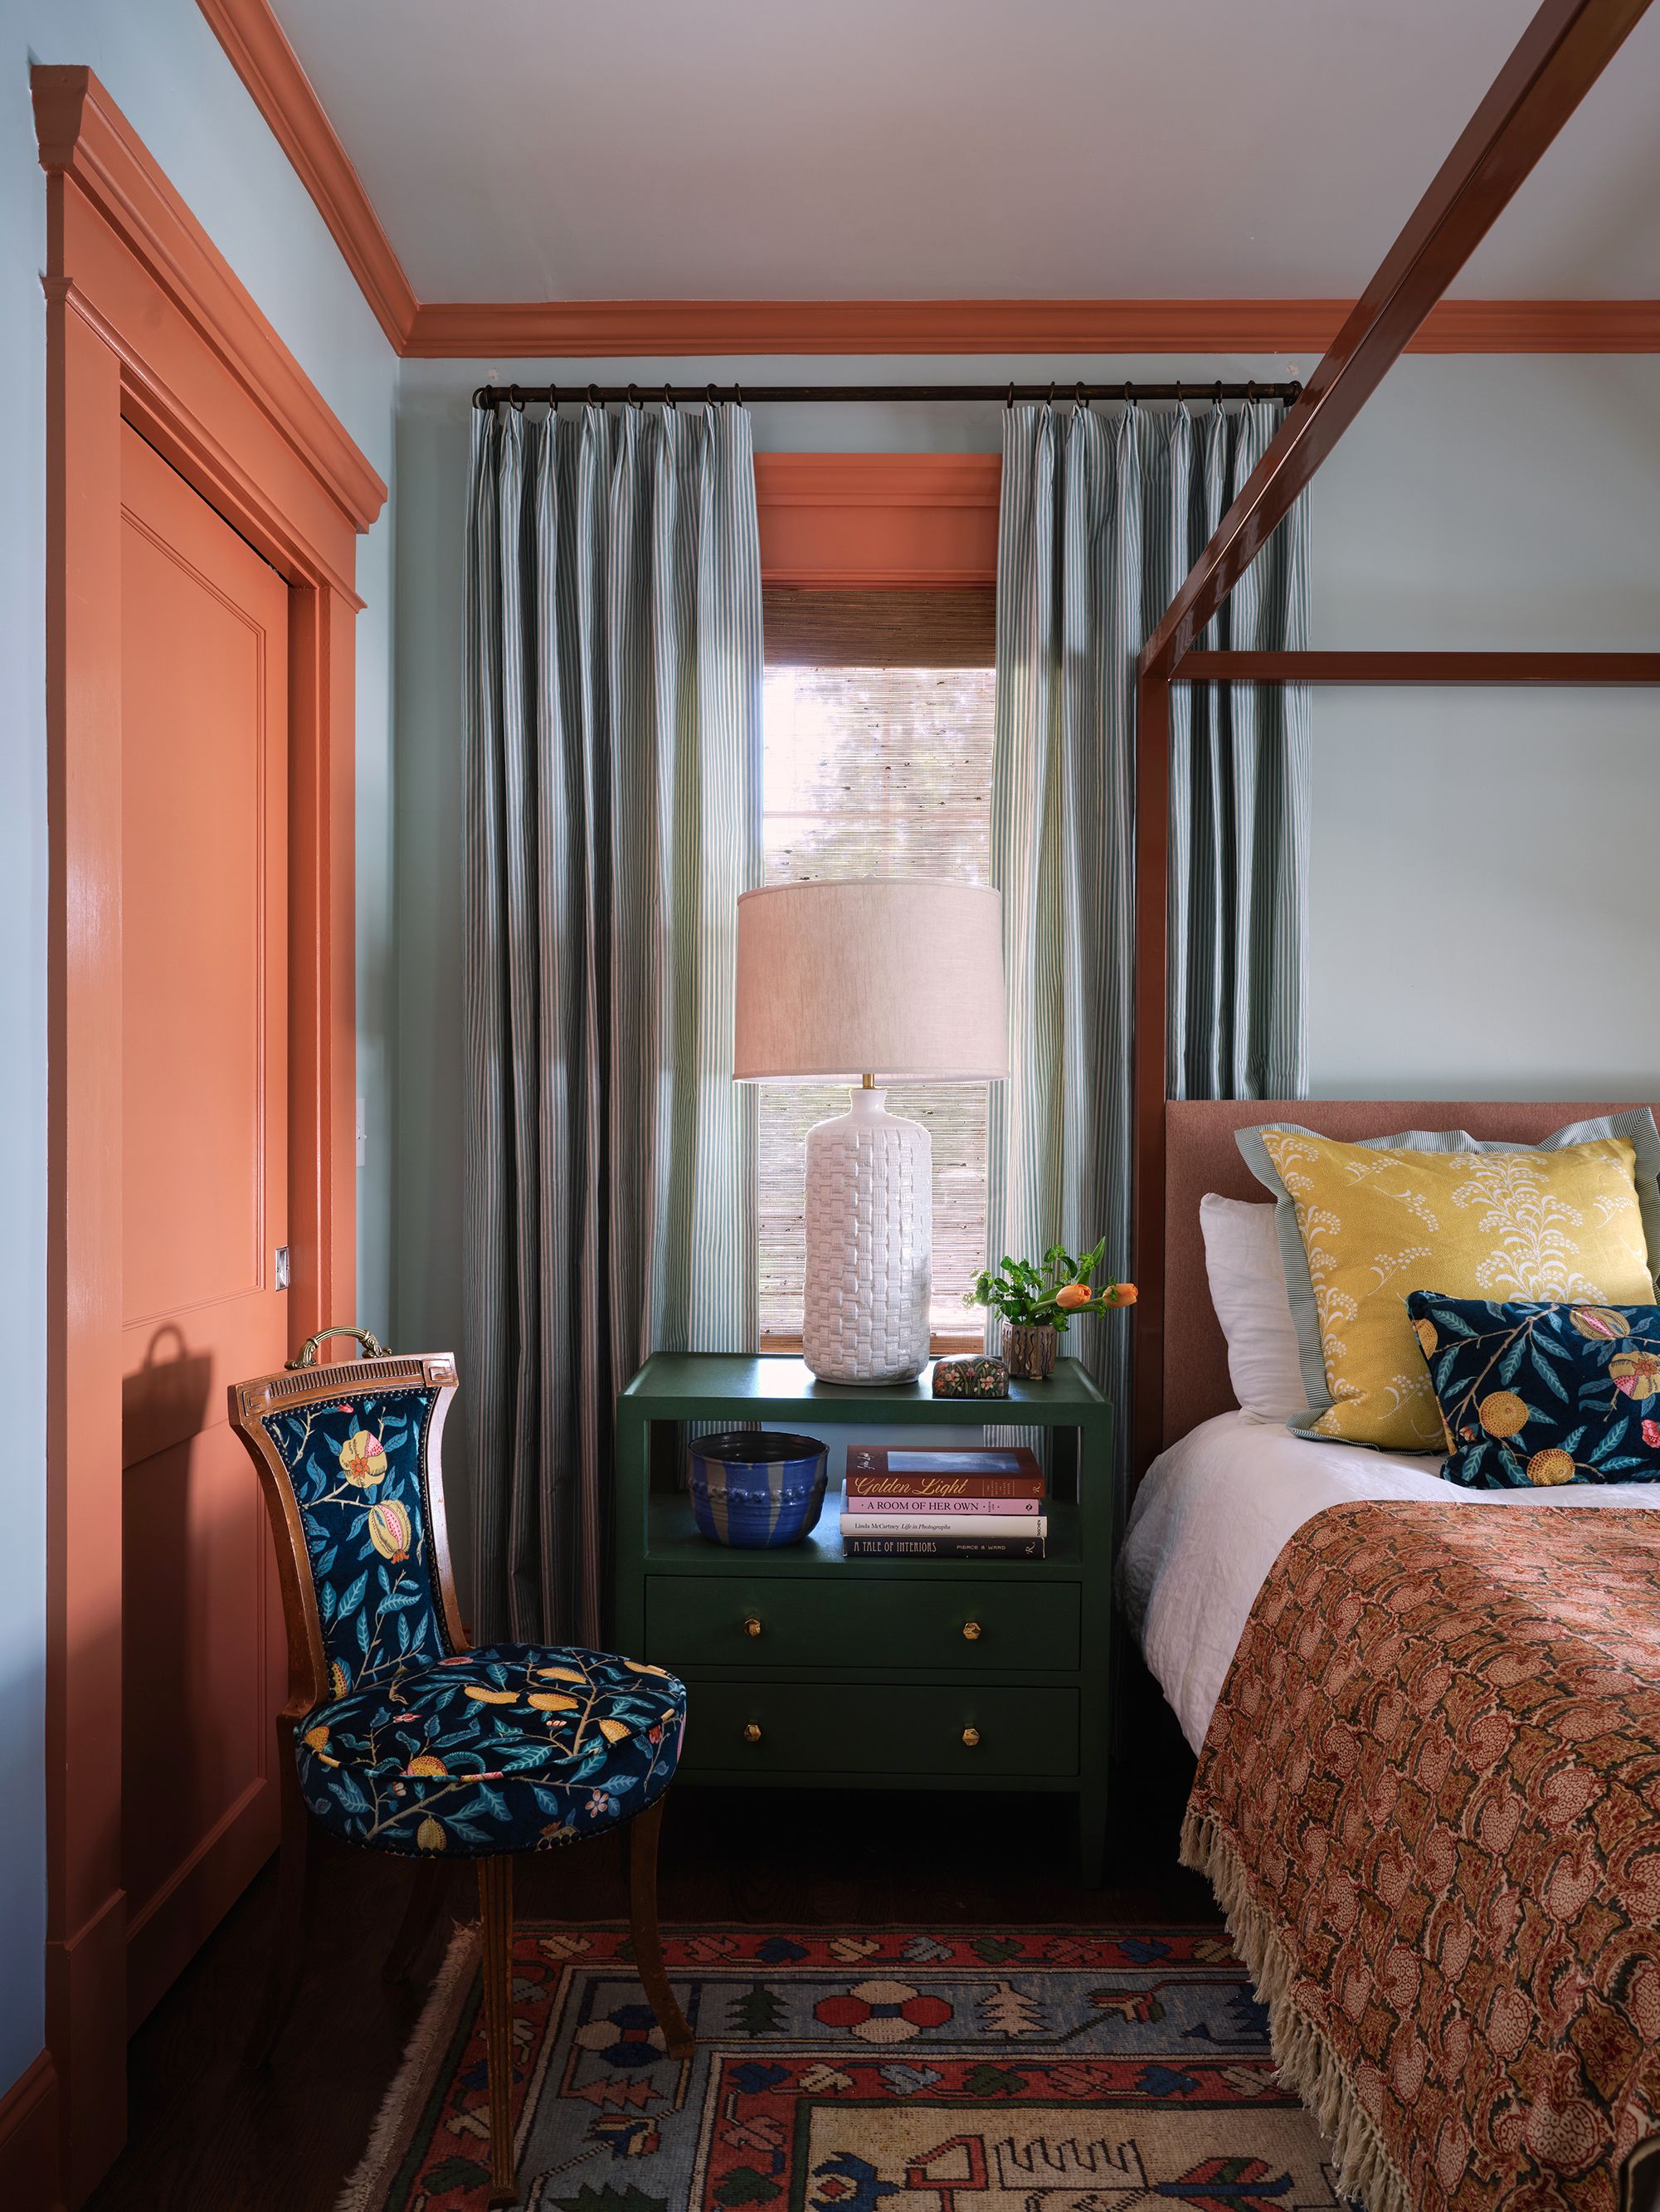 100+ Bedroom Decorating Ideas in 2022 - Designs for Beautiful Bedrooms